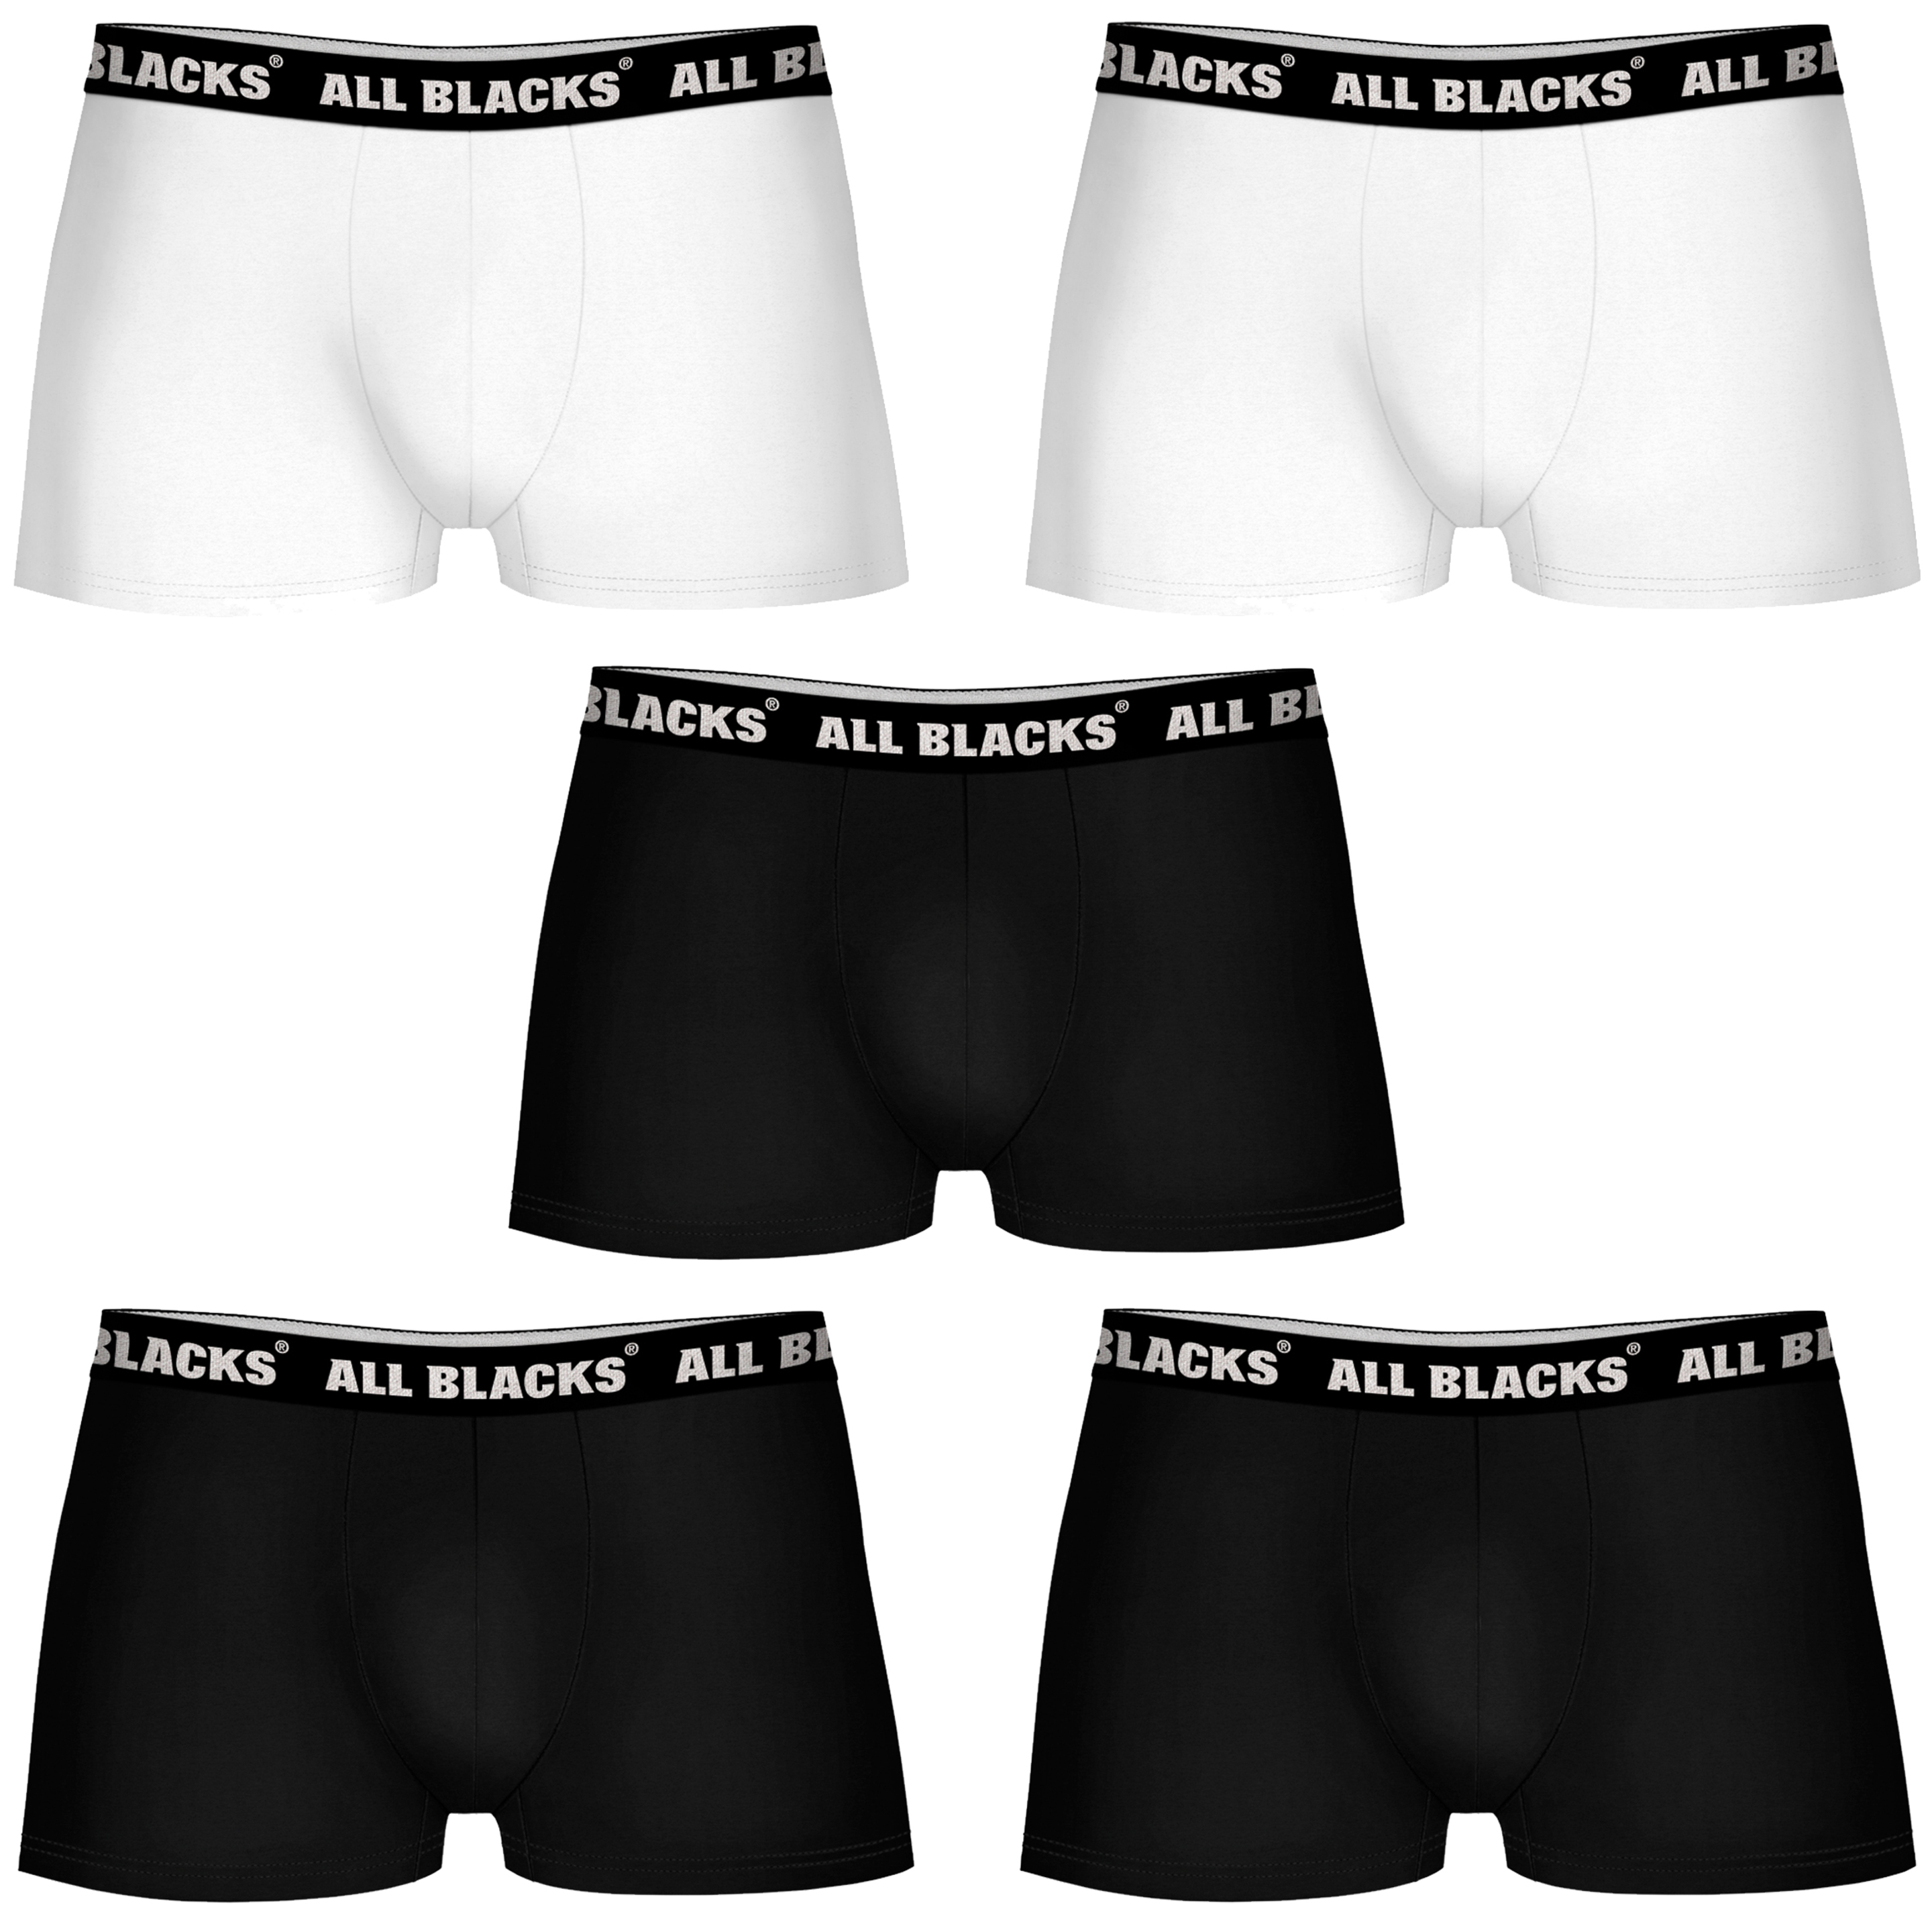 Calzoncillos Boxer All Blacks (Pack 5) - Blanco/Negro  MKP